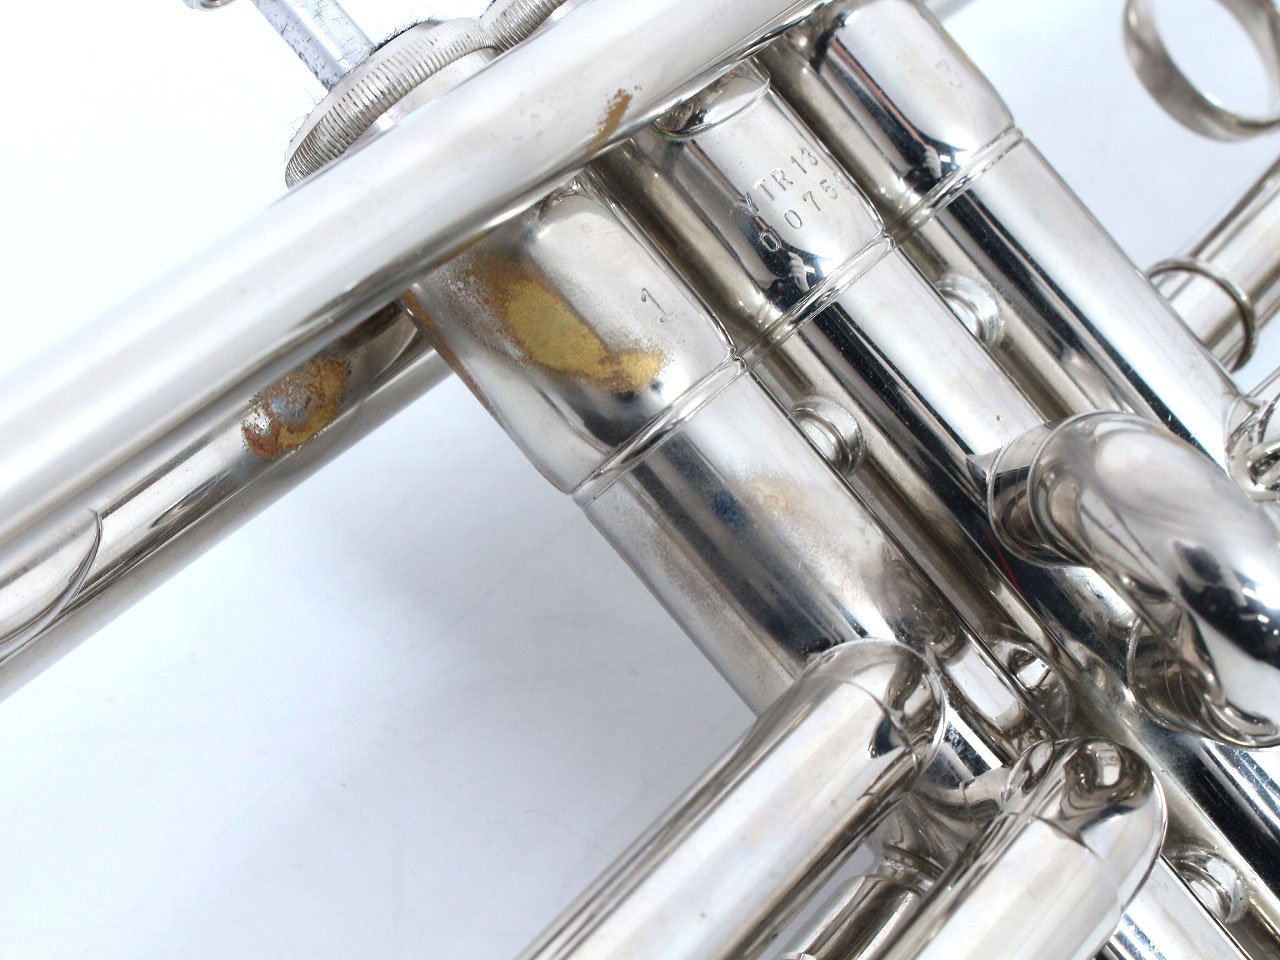 [SN 007596] USED YAMAHA / Trumpet YTR-1310 Nickel plated finish [20]